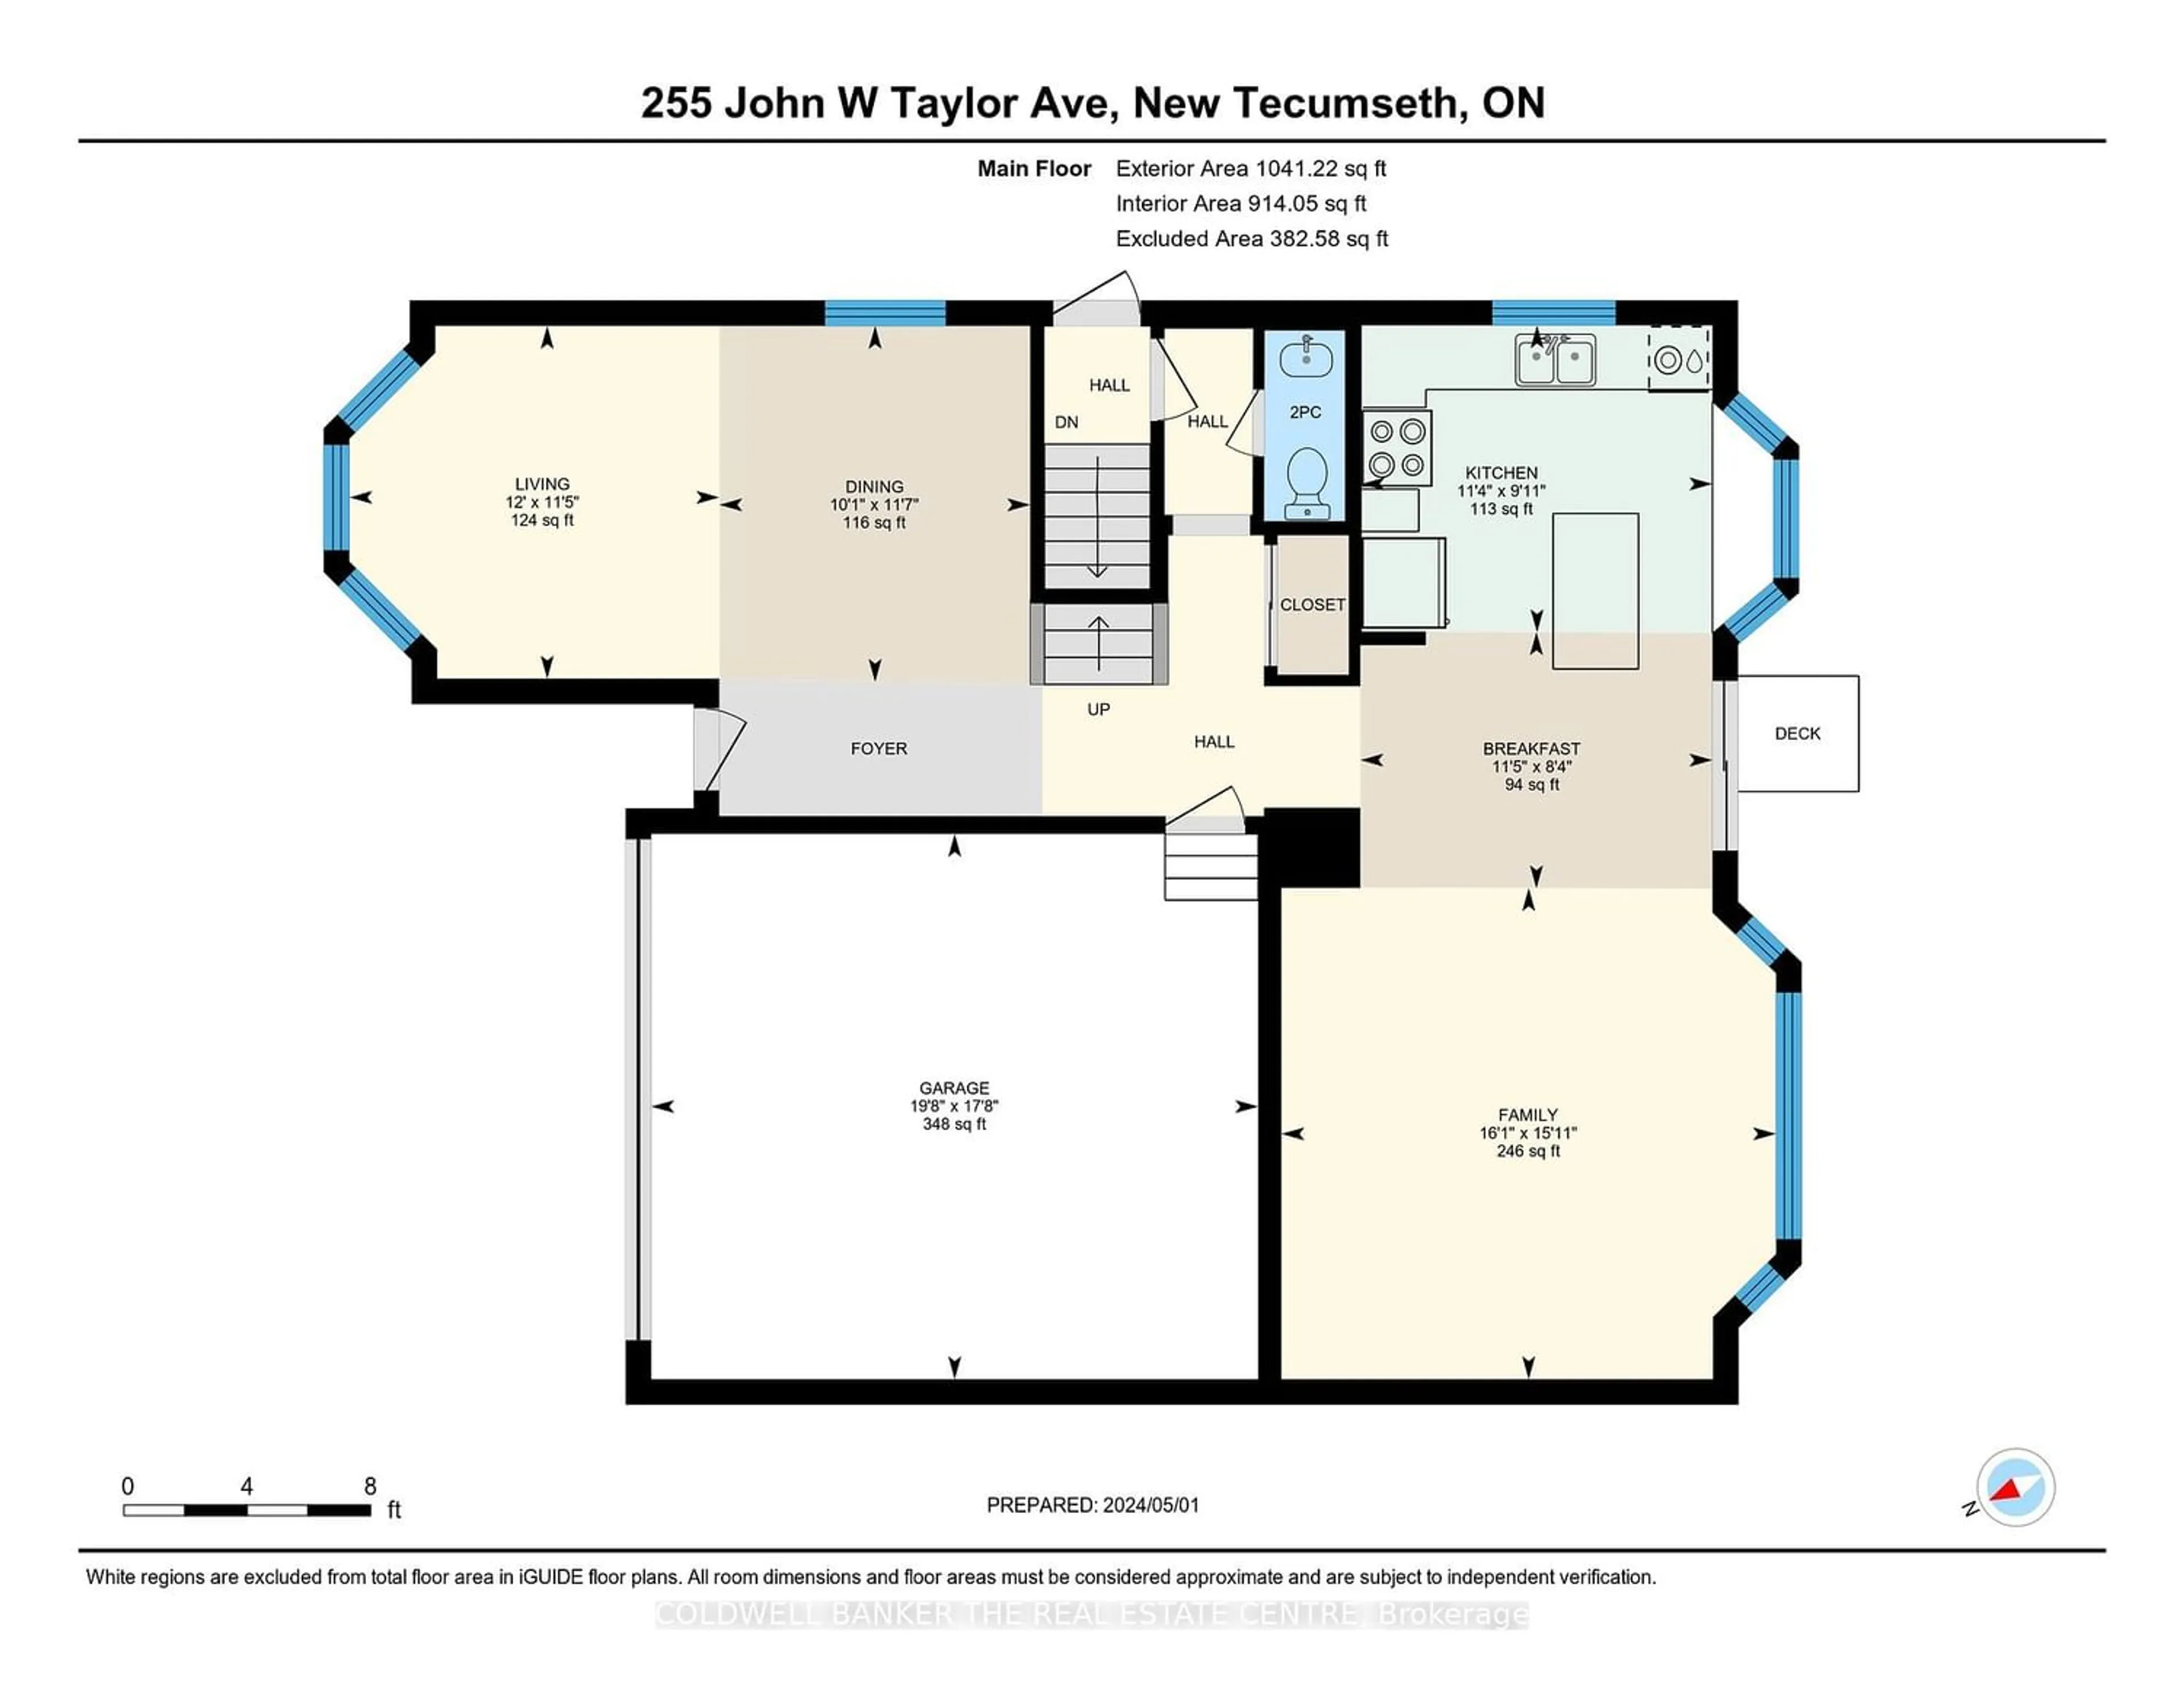 Floor plan for 255 John W. Taylor Ave, New Tecumseth Ontario L9R 0J5